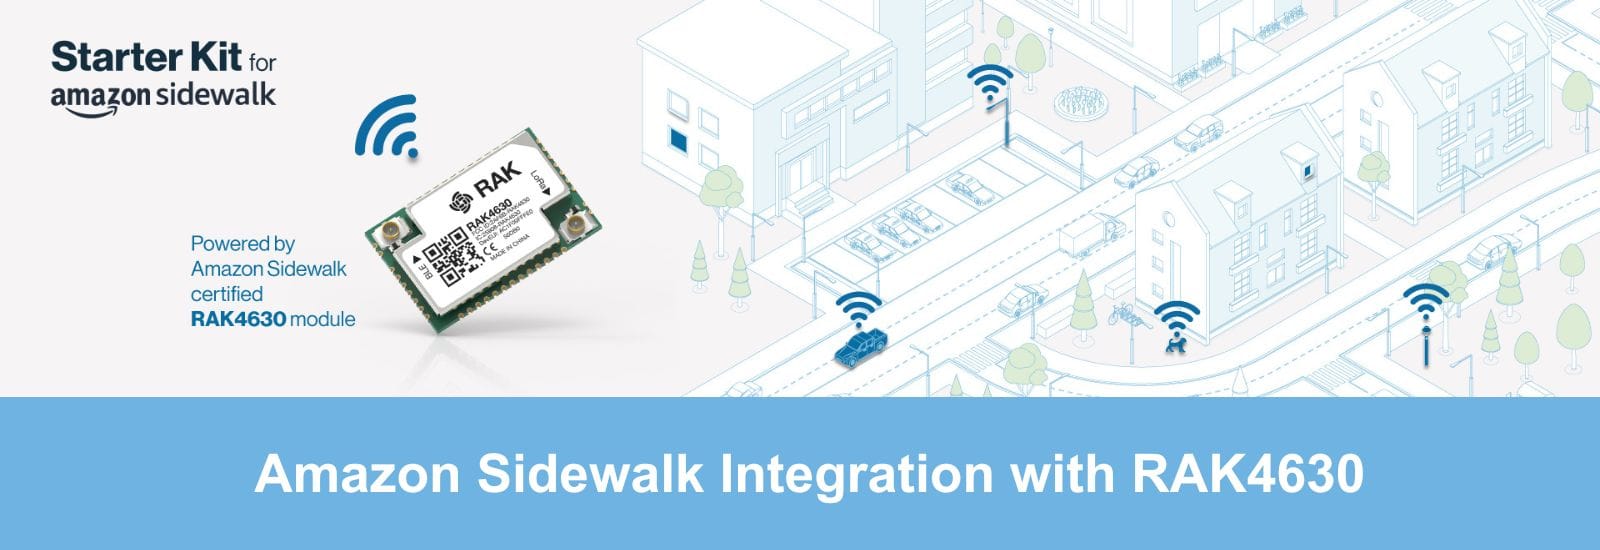 Amazon Sidewalk Integration with RAK4630